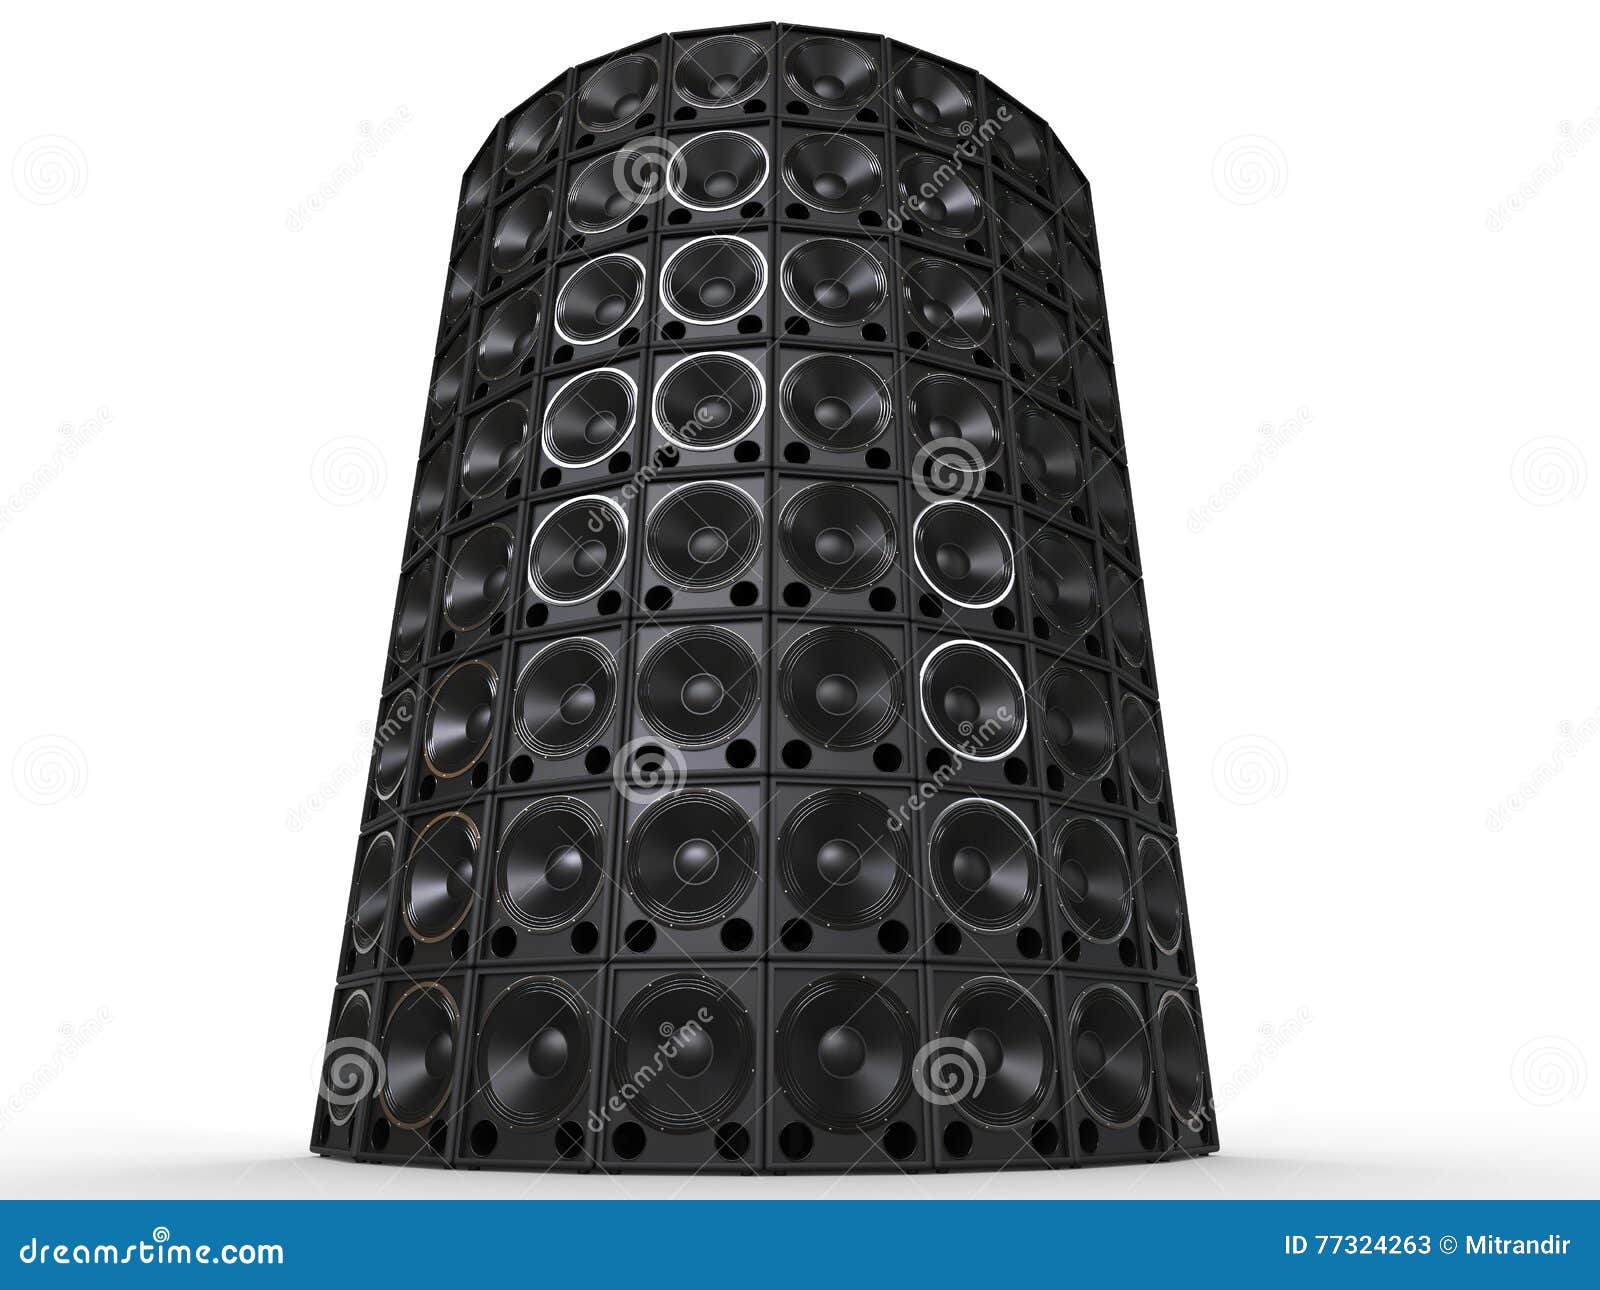 tower of hifi woofer speakers